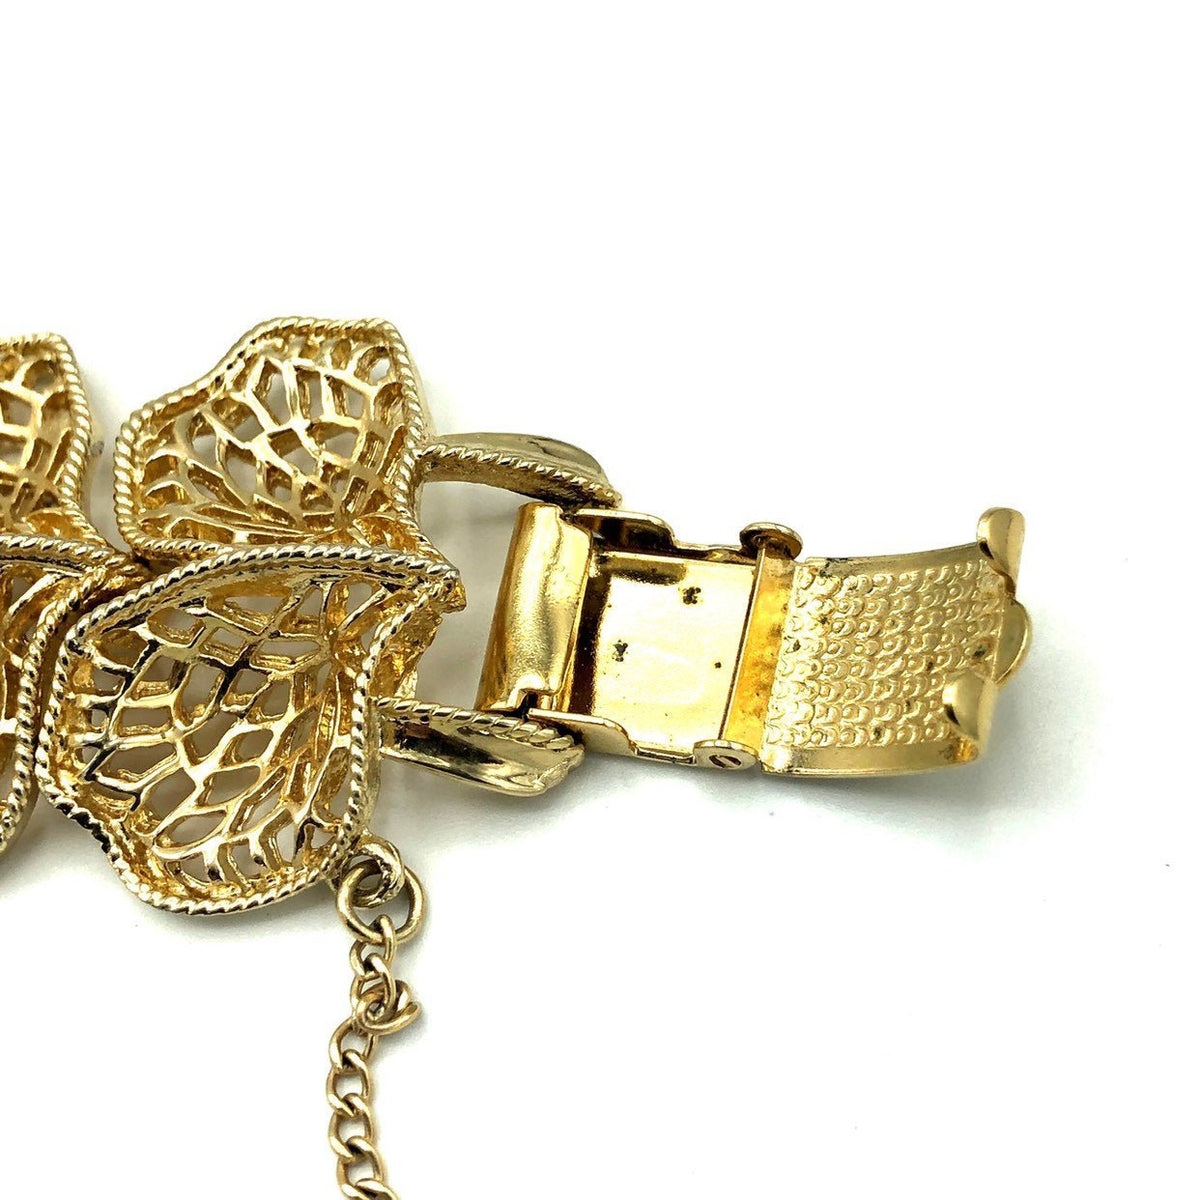 Coro Pegasus Vintage Gold Filigree Leaf Bracelet - 24 Wishes Vintage Jewelry